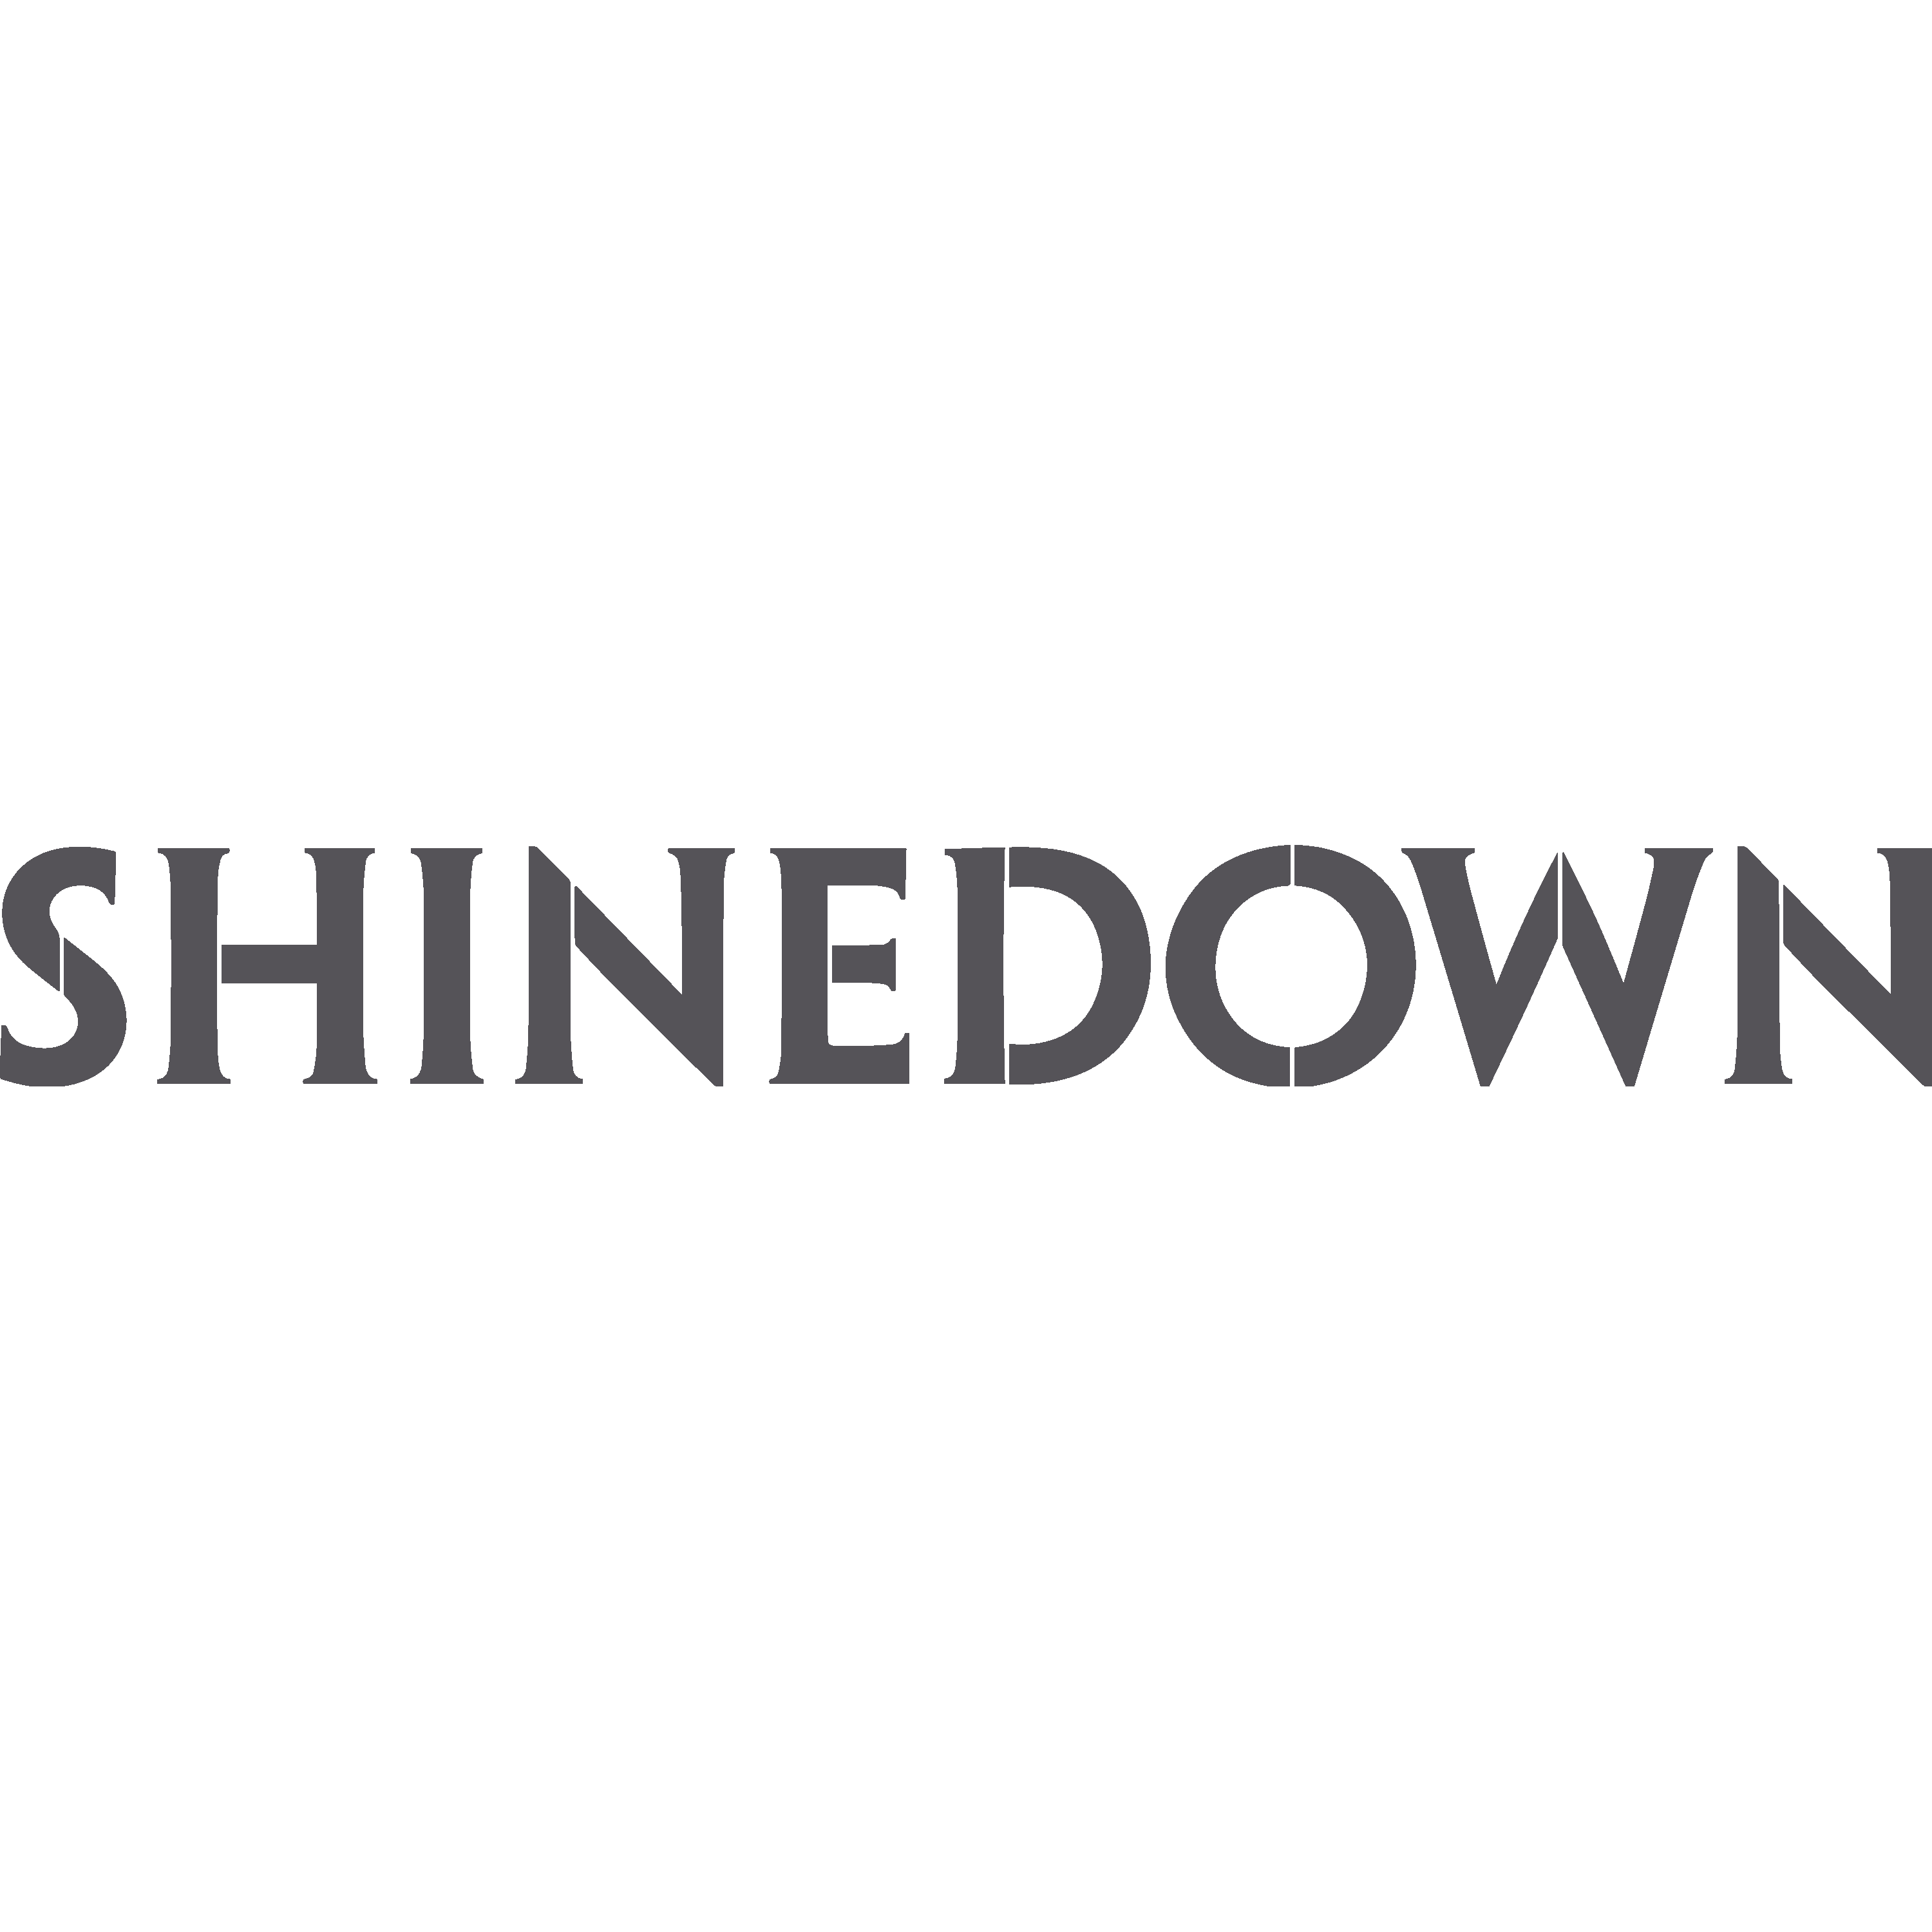 Shinedown Logo Transparent Picture